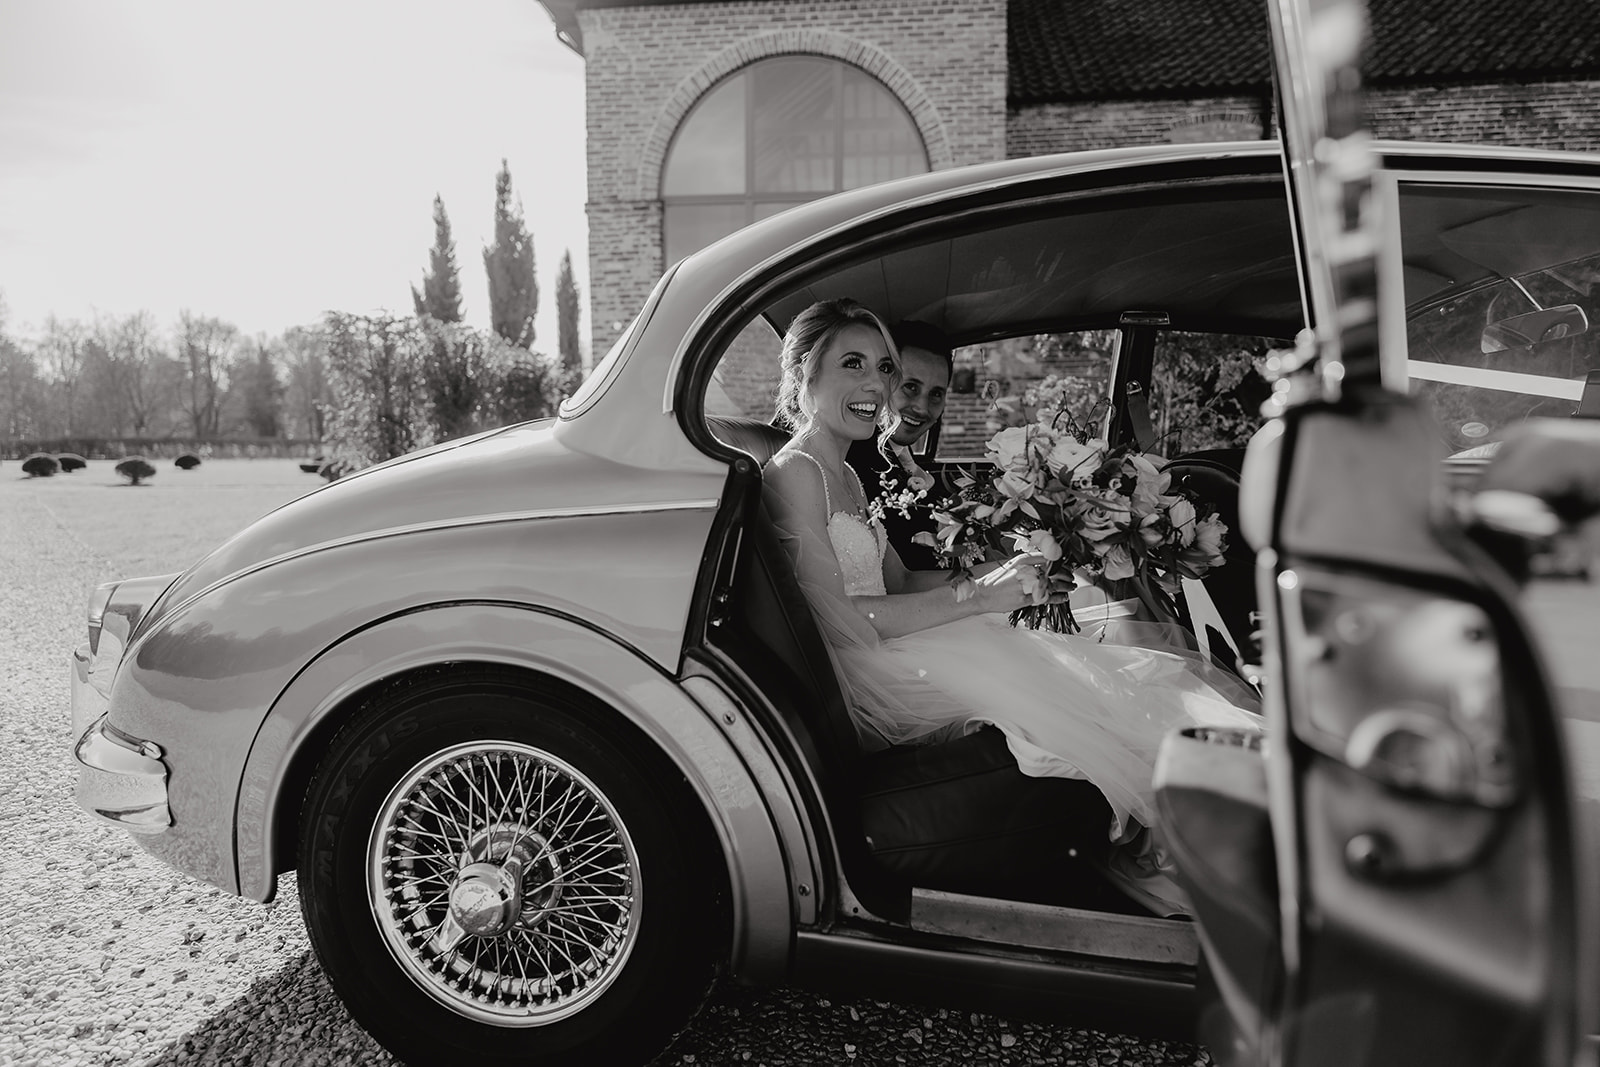 The Bride arrives in a vintage wedding car